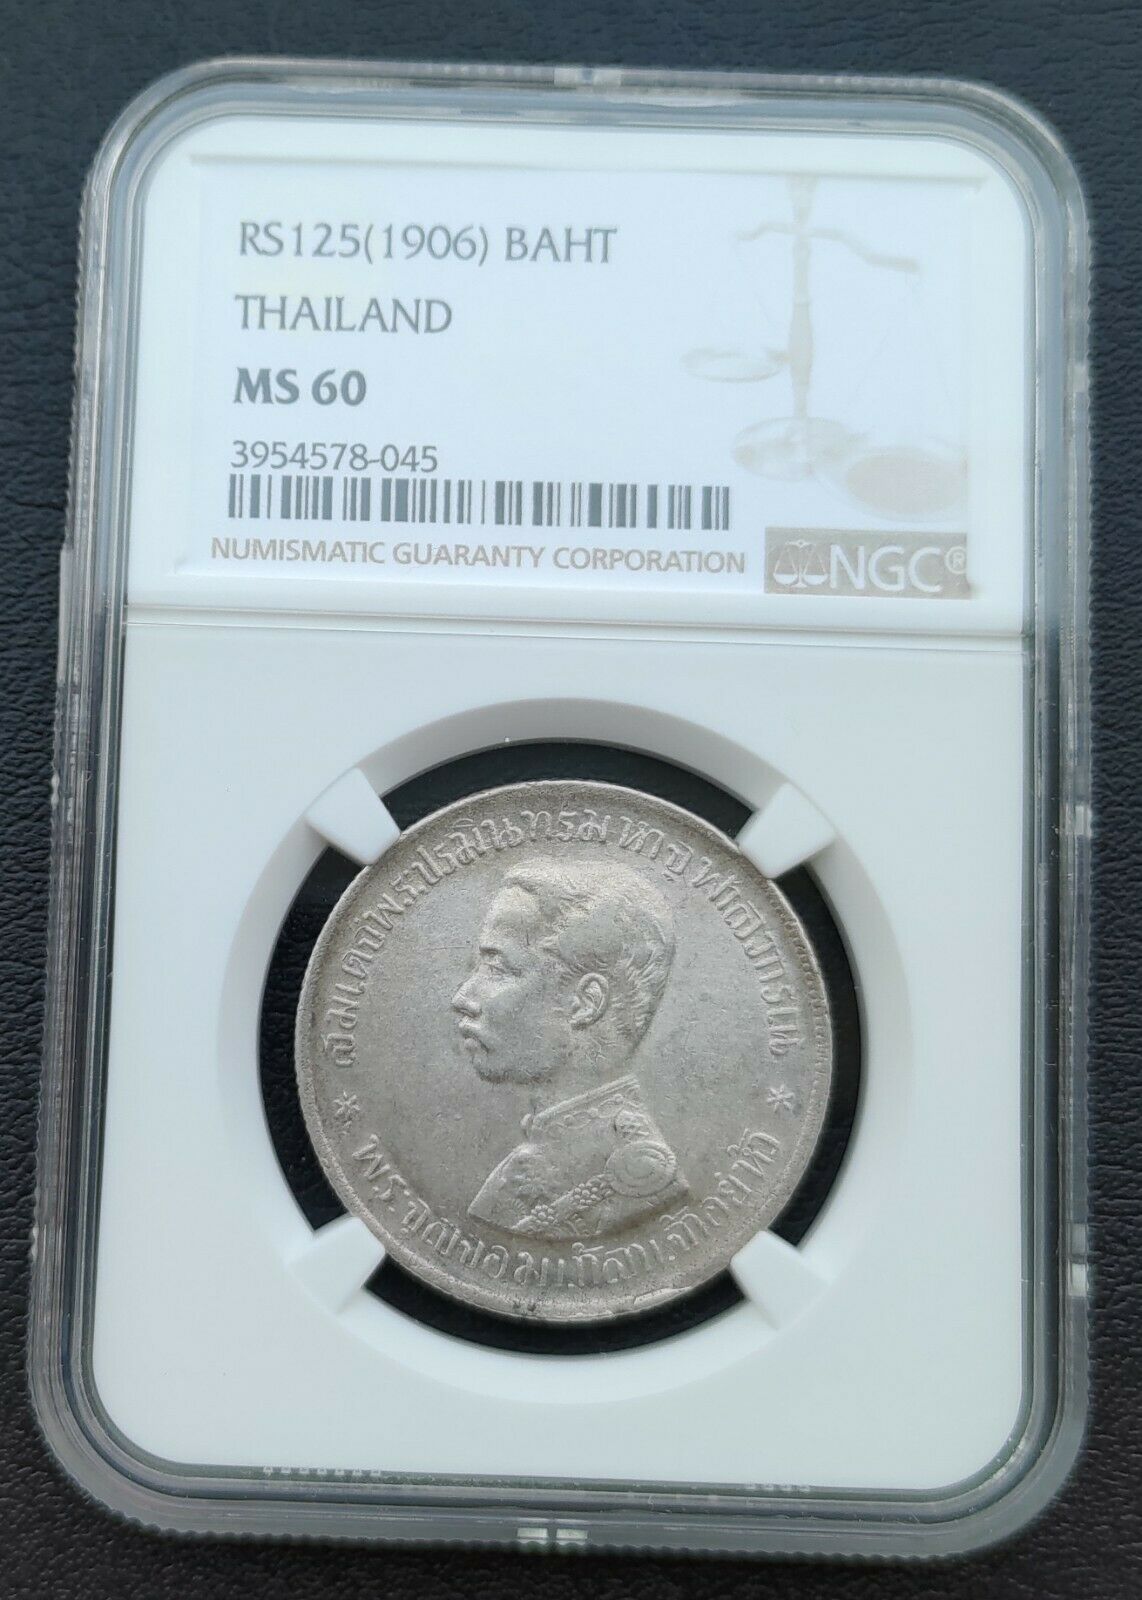 Thailand 1 Baht Rs 125 (1905) Rama V Silver Coin Ngc Ms60